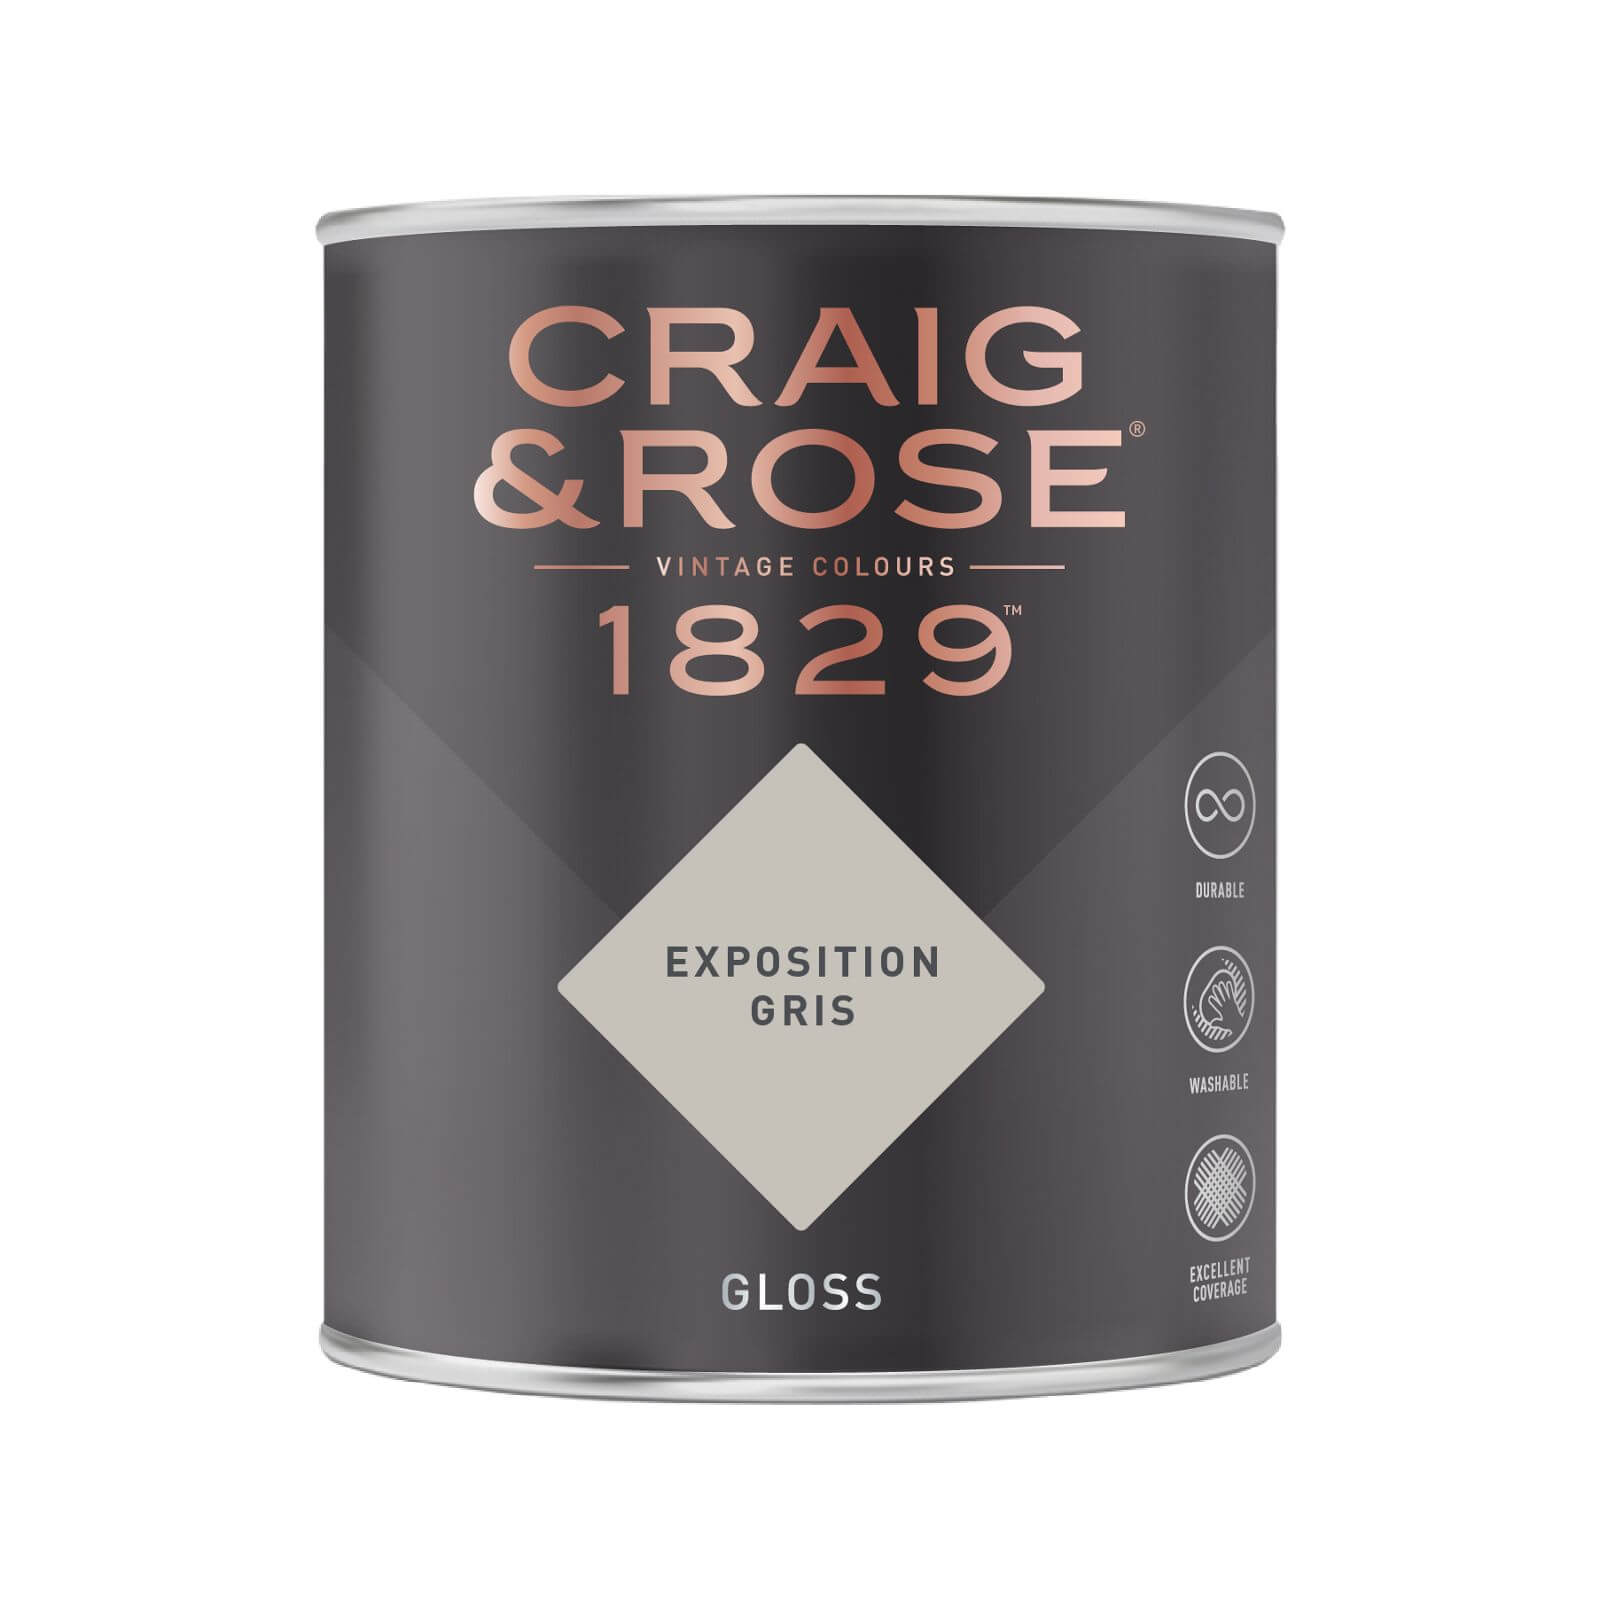 Craig & Rose 1829 Gloss Paint Exposition Gris - 750ml